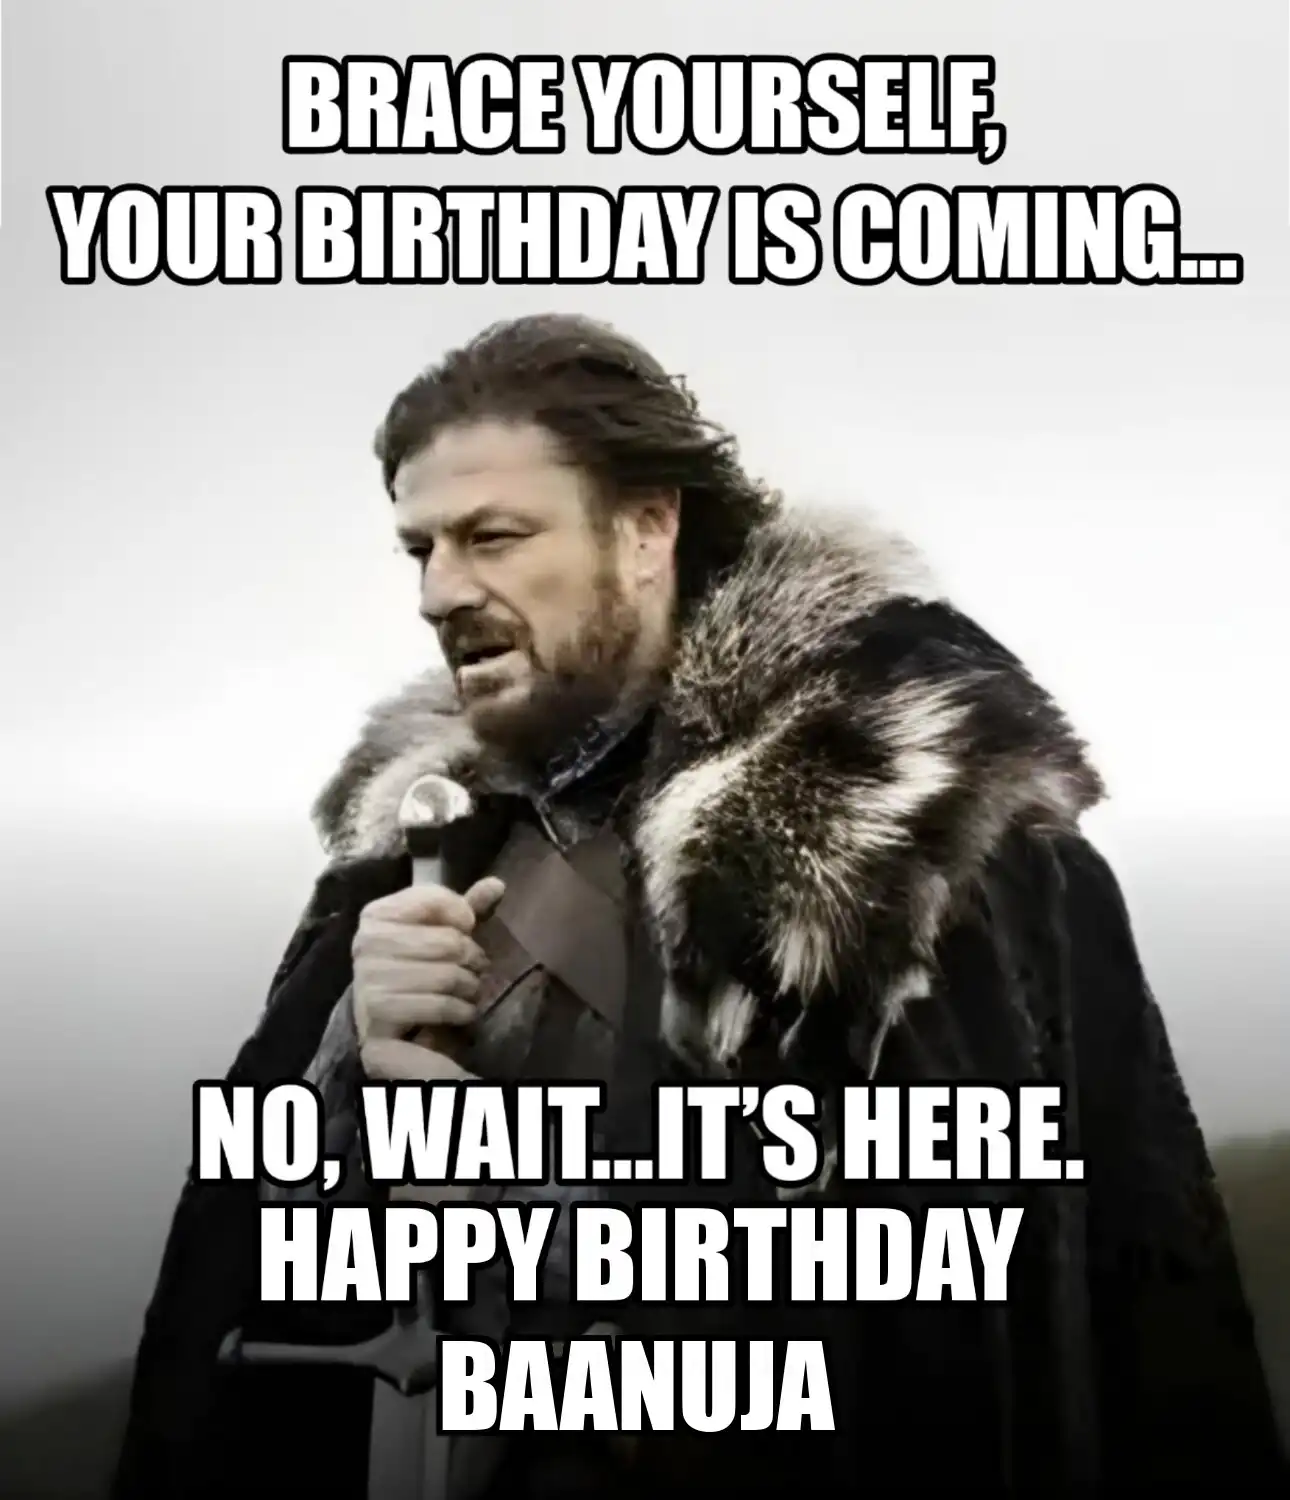 Happy Birthday Baanuja Brace Yourself Your Birthday Is Coming Meme